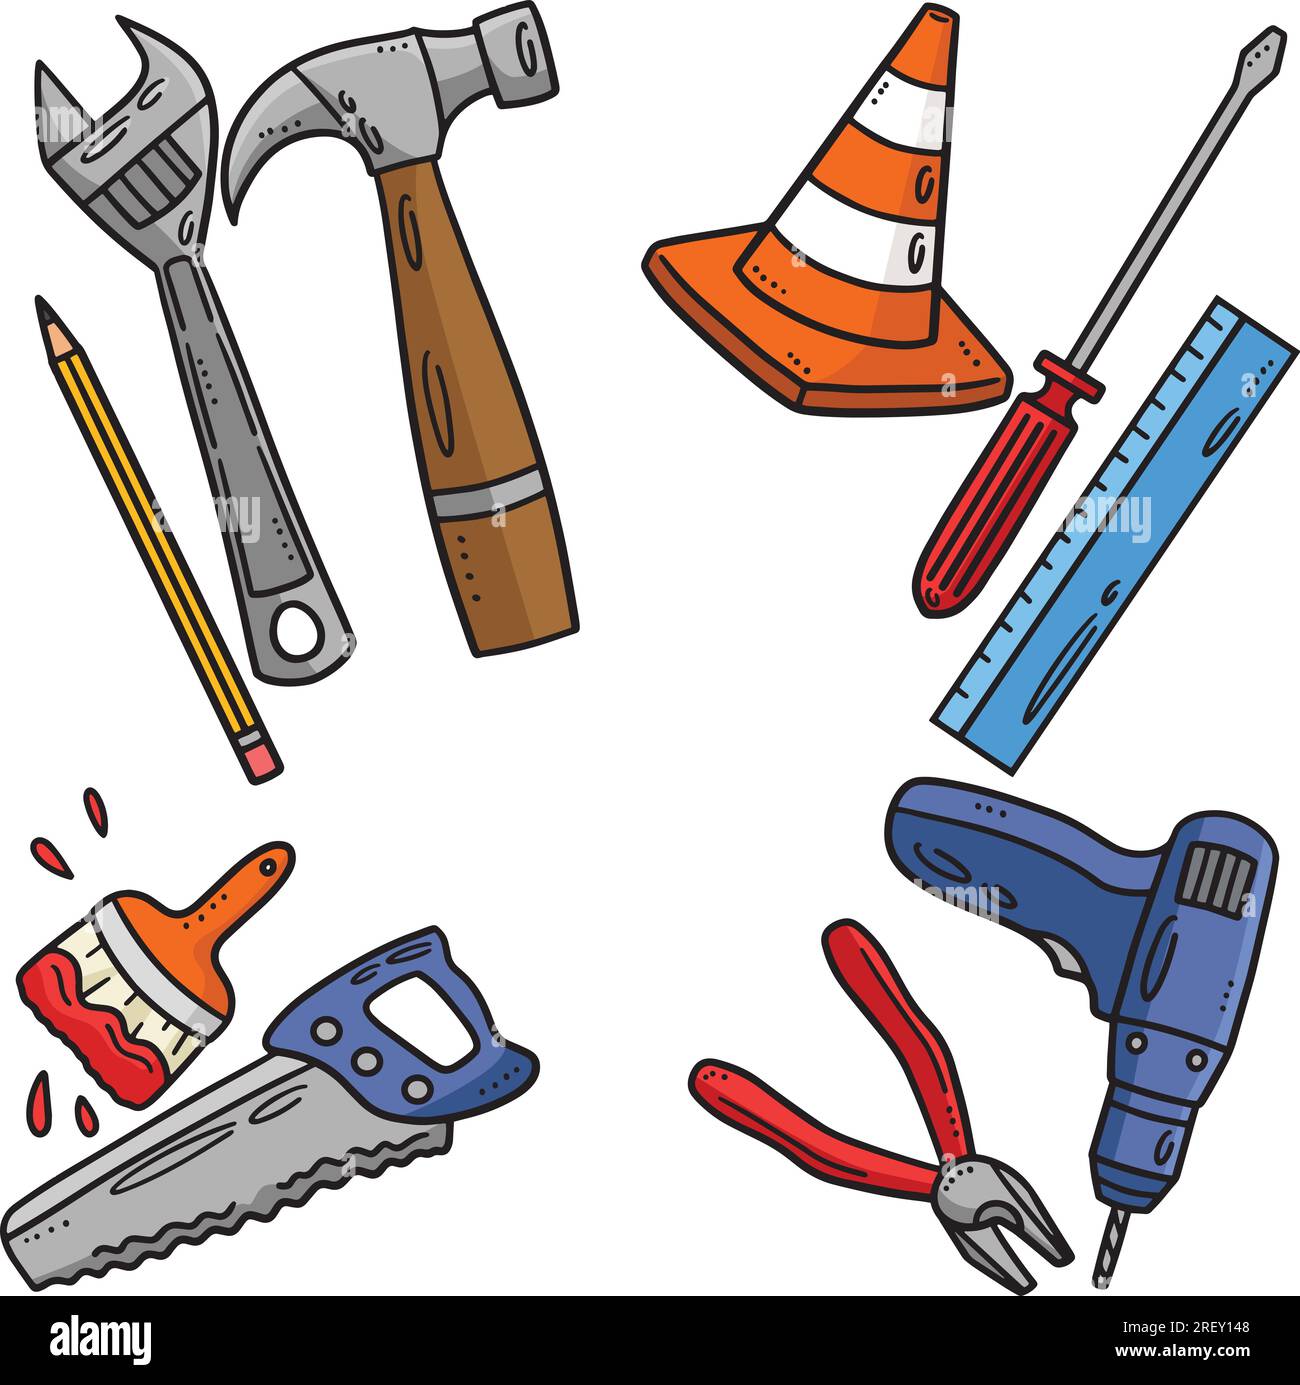 Construction Tools Cartoon Colored Clipart 2REY148 